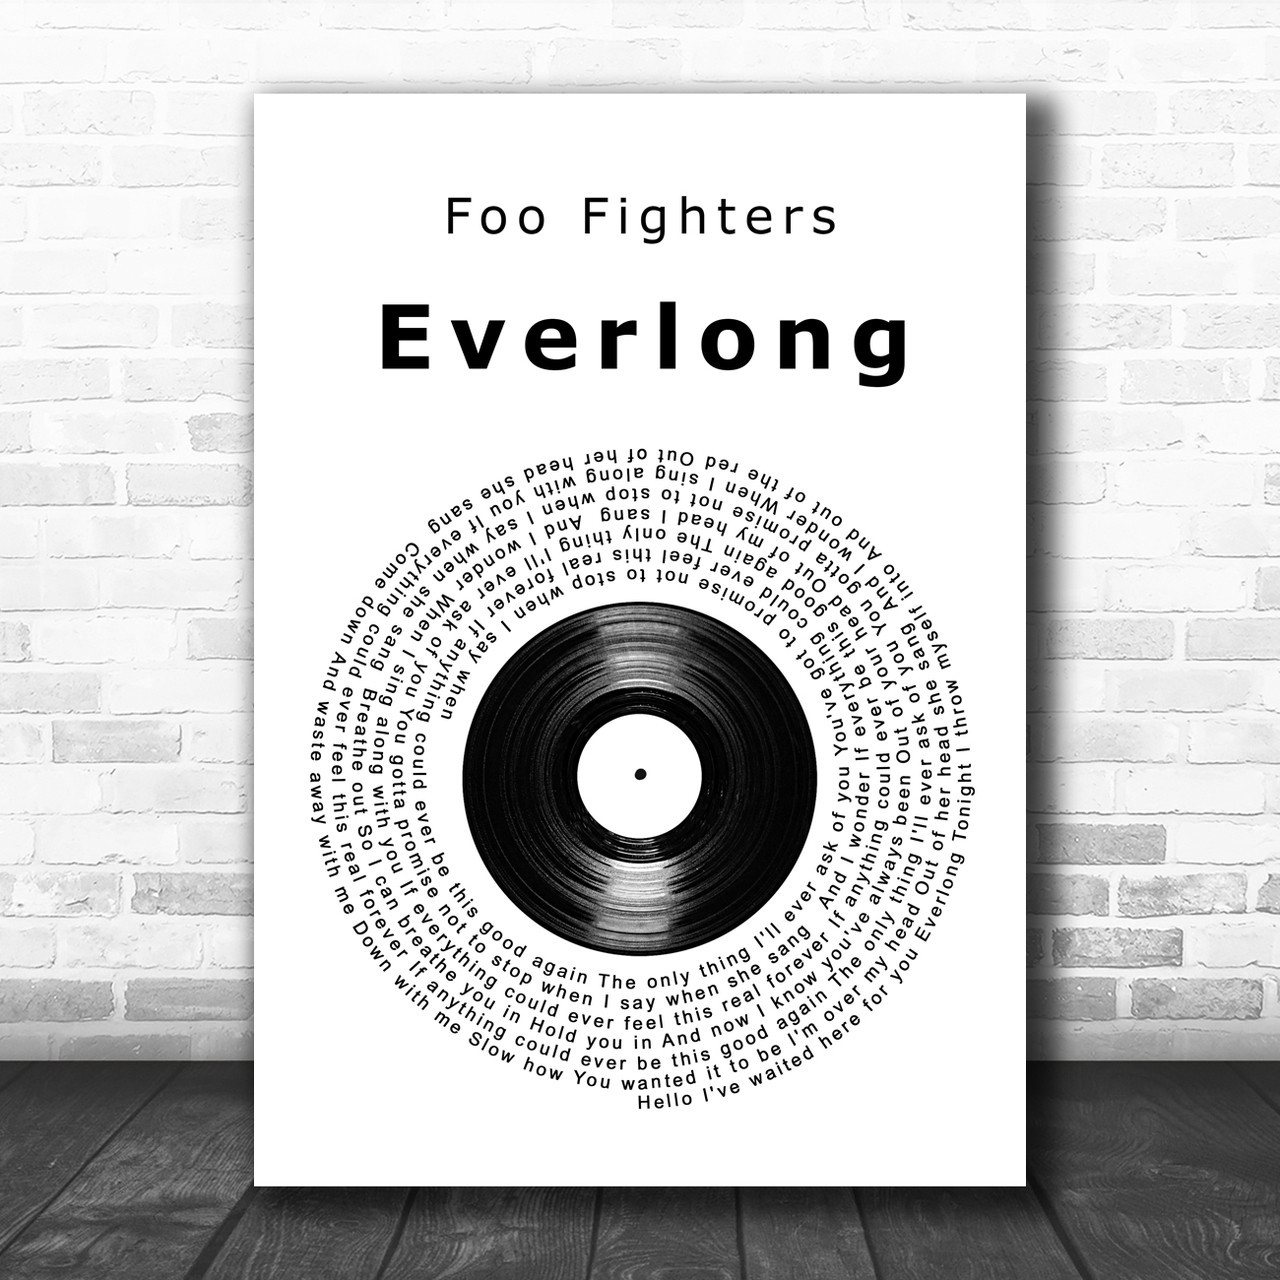 Everlong- Foo Fighters  Foo fighters lyrics, Everlong lyrics, Foo fighters  everlong